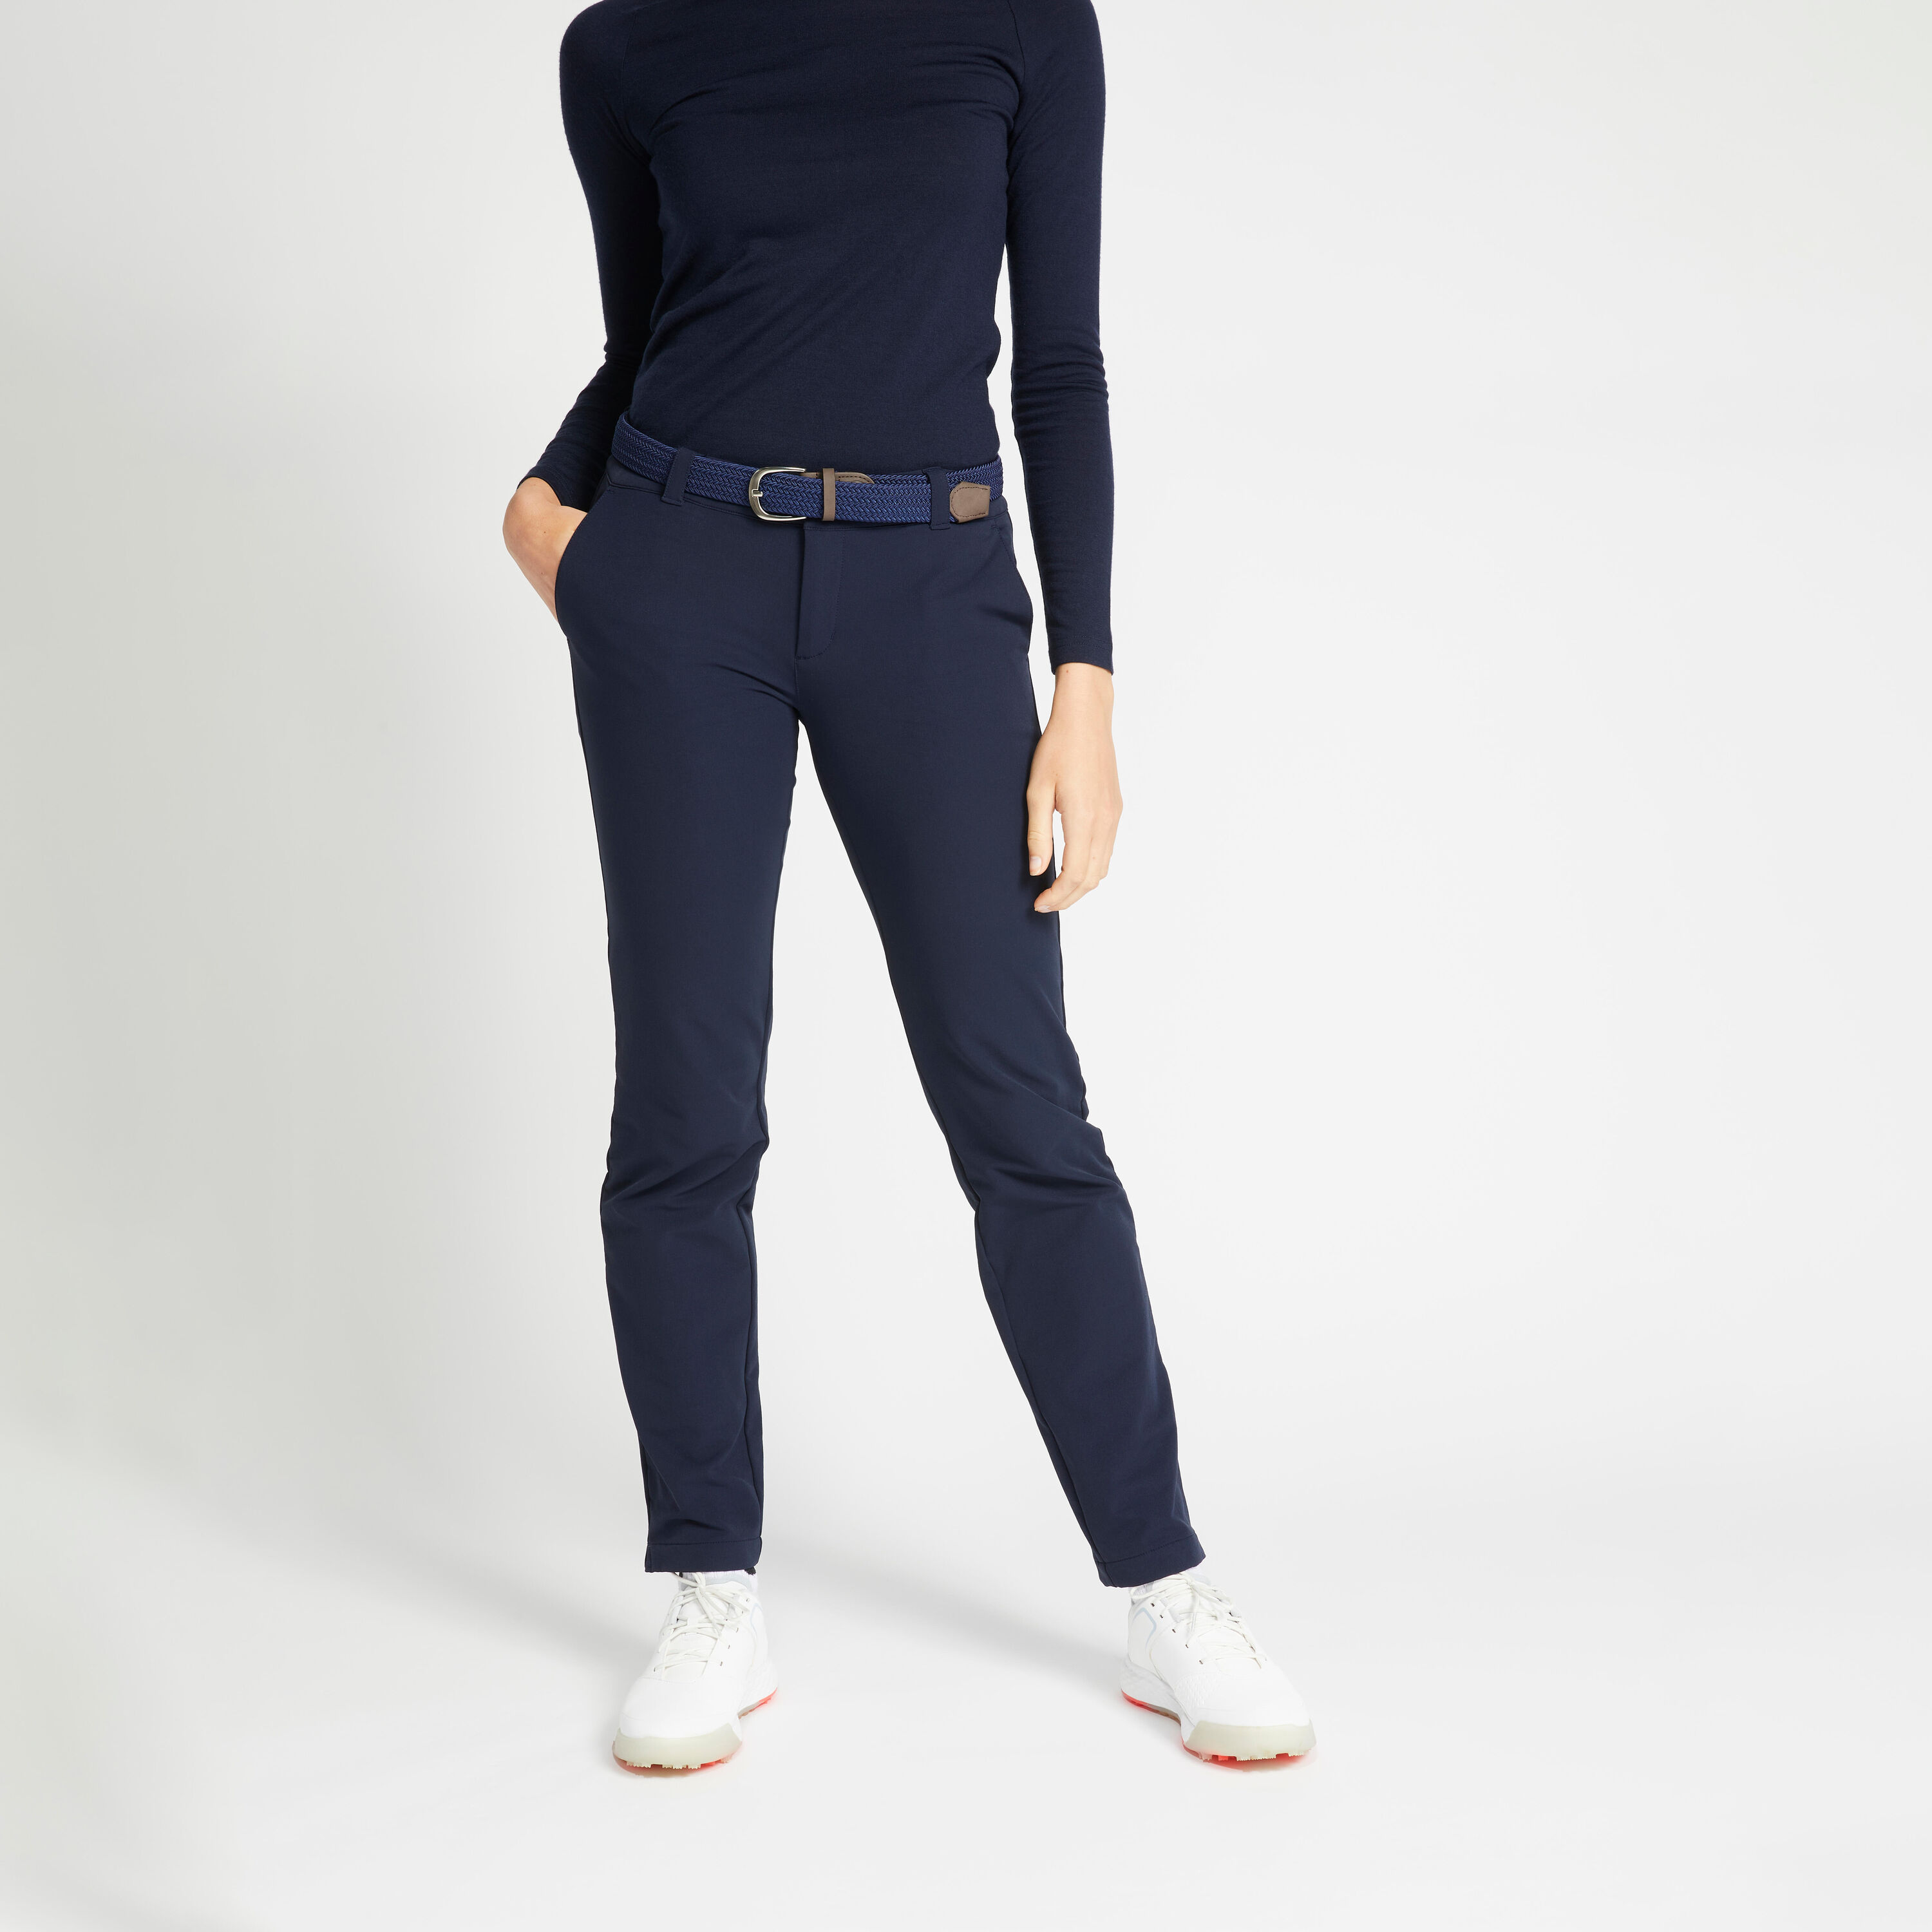 INESIS Women's golf winter trousers - CW500 navy blue